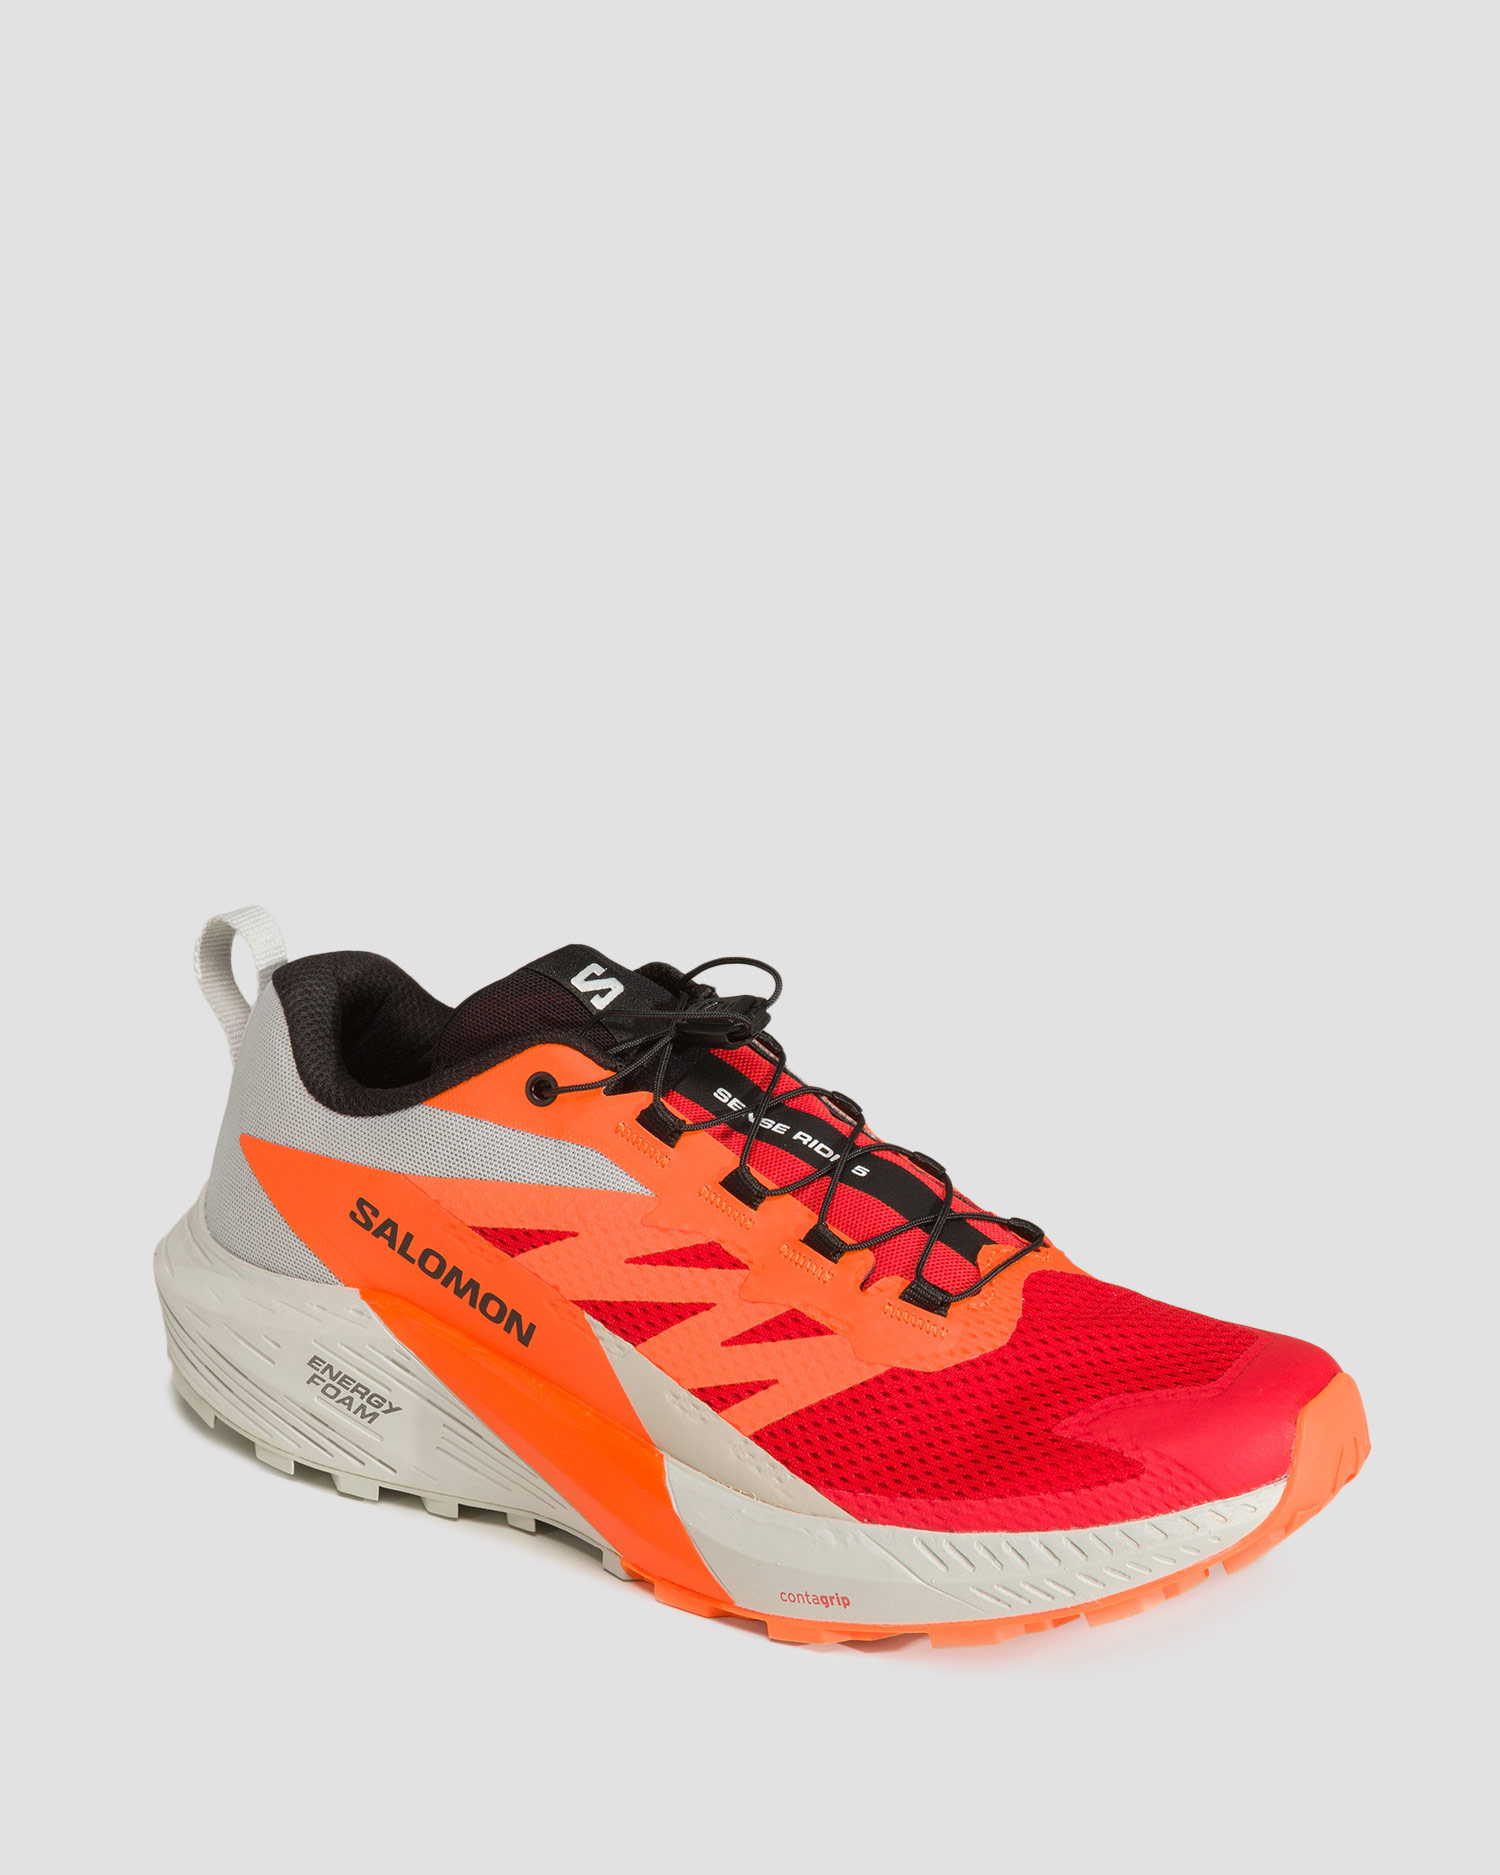 Trailové boty pánské Salomon Sense Ride 5  L47046200-lunroc-shocking-orange-fiery-red | S'portofino